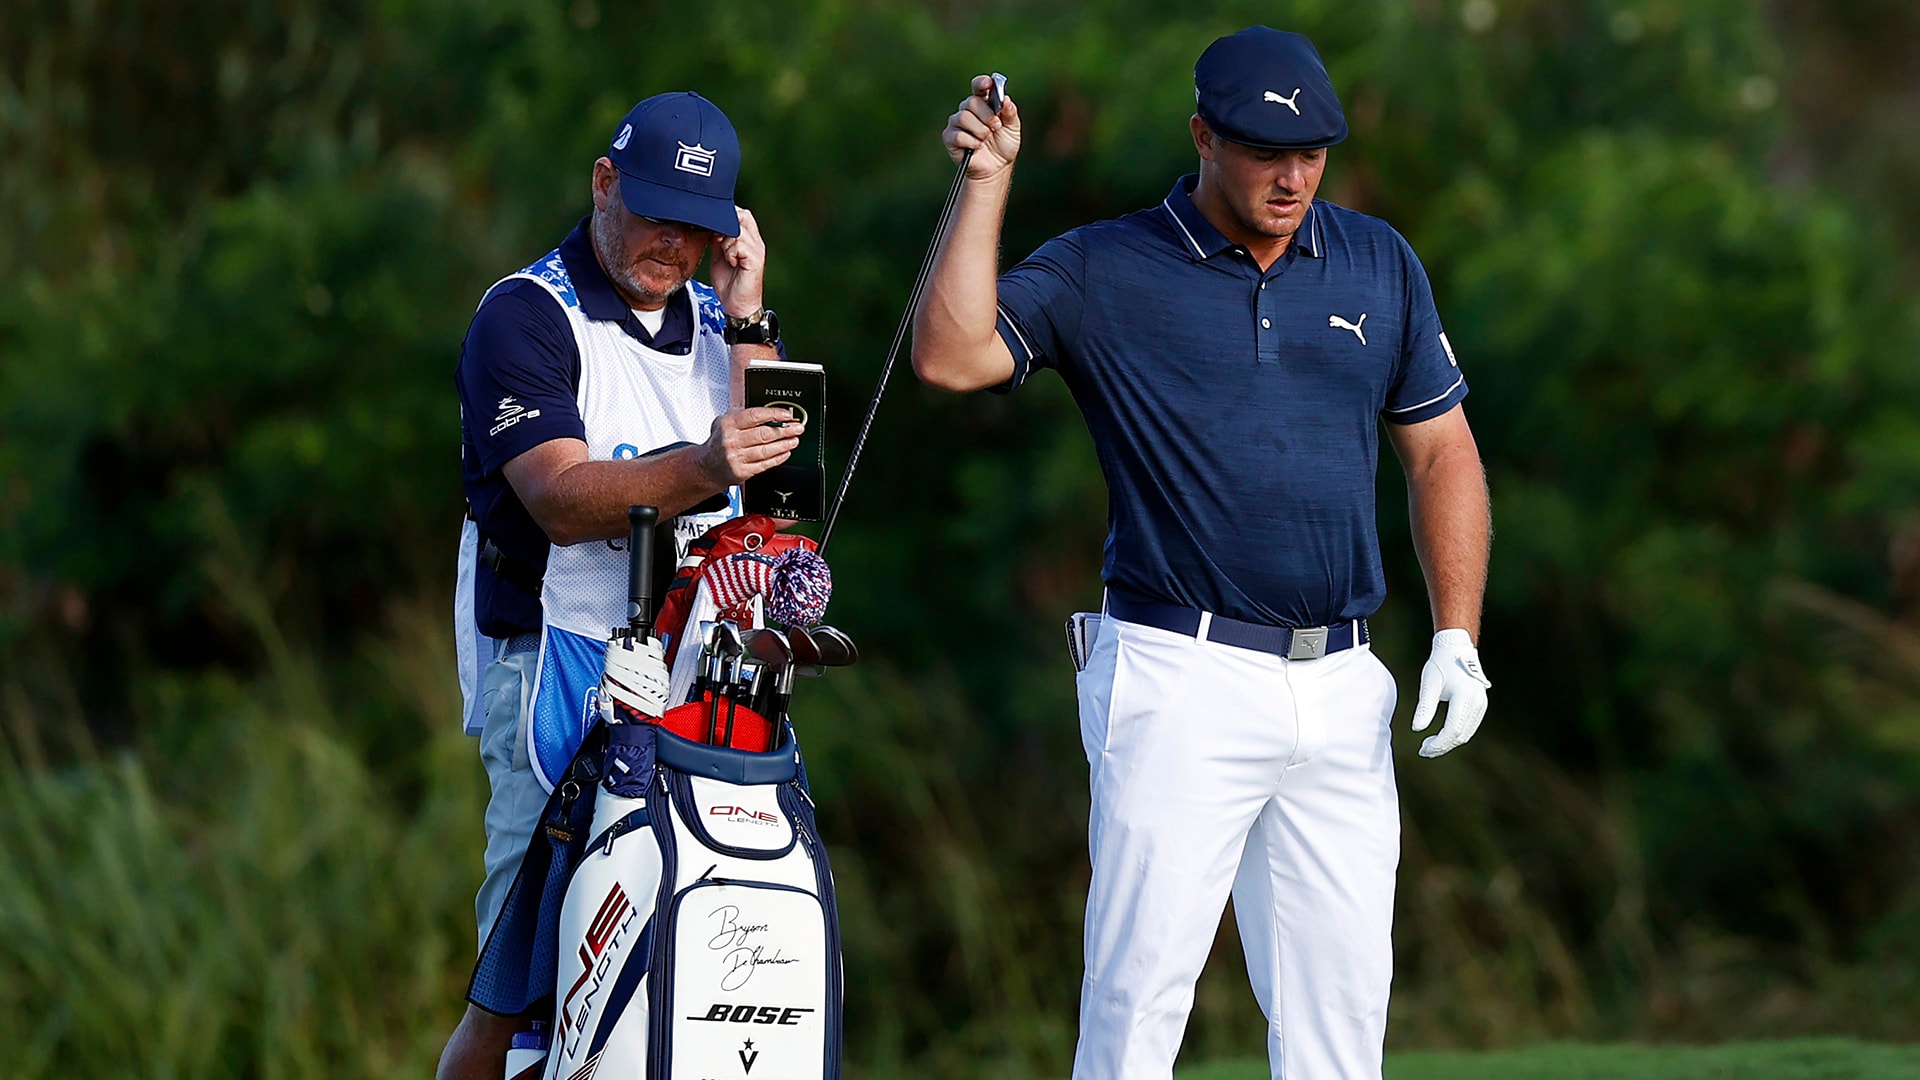 Trump logo no longer on bag, Bryson DeChambeau says PGA decision ‘is what it is’